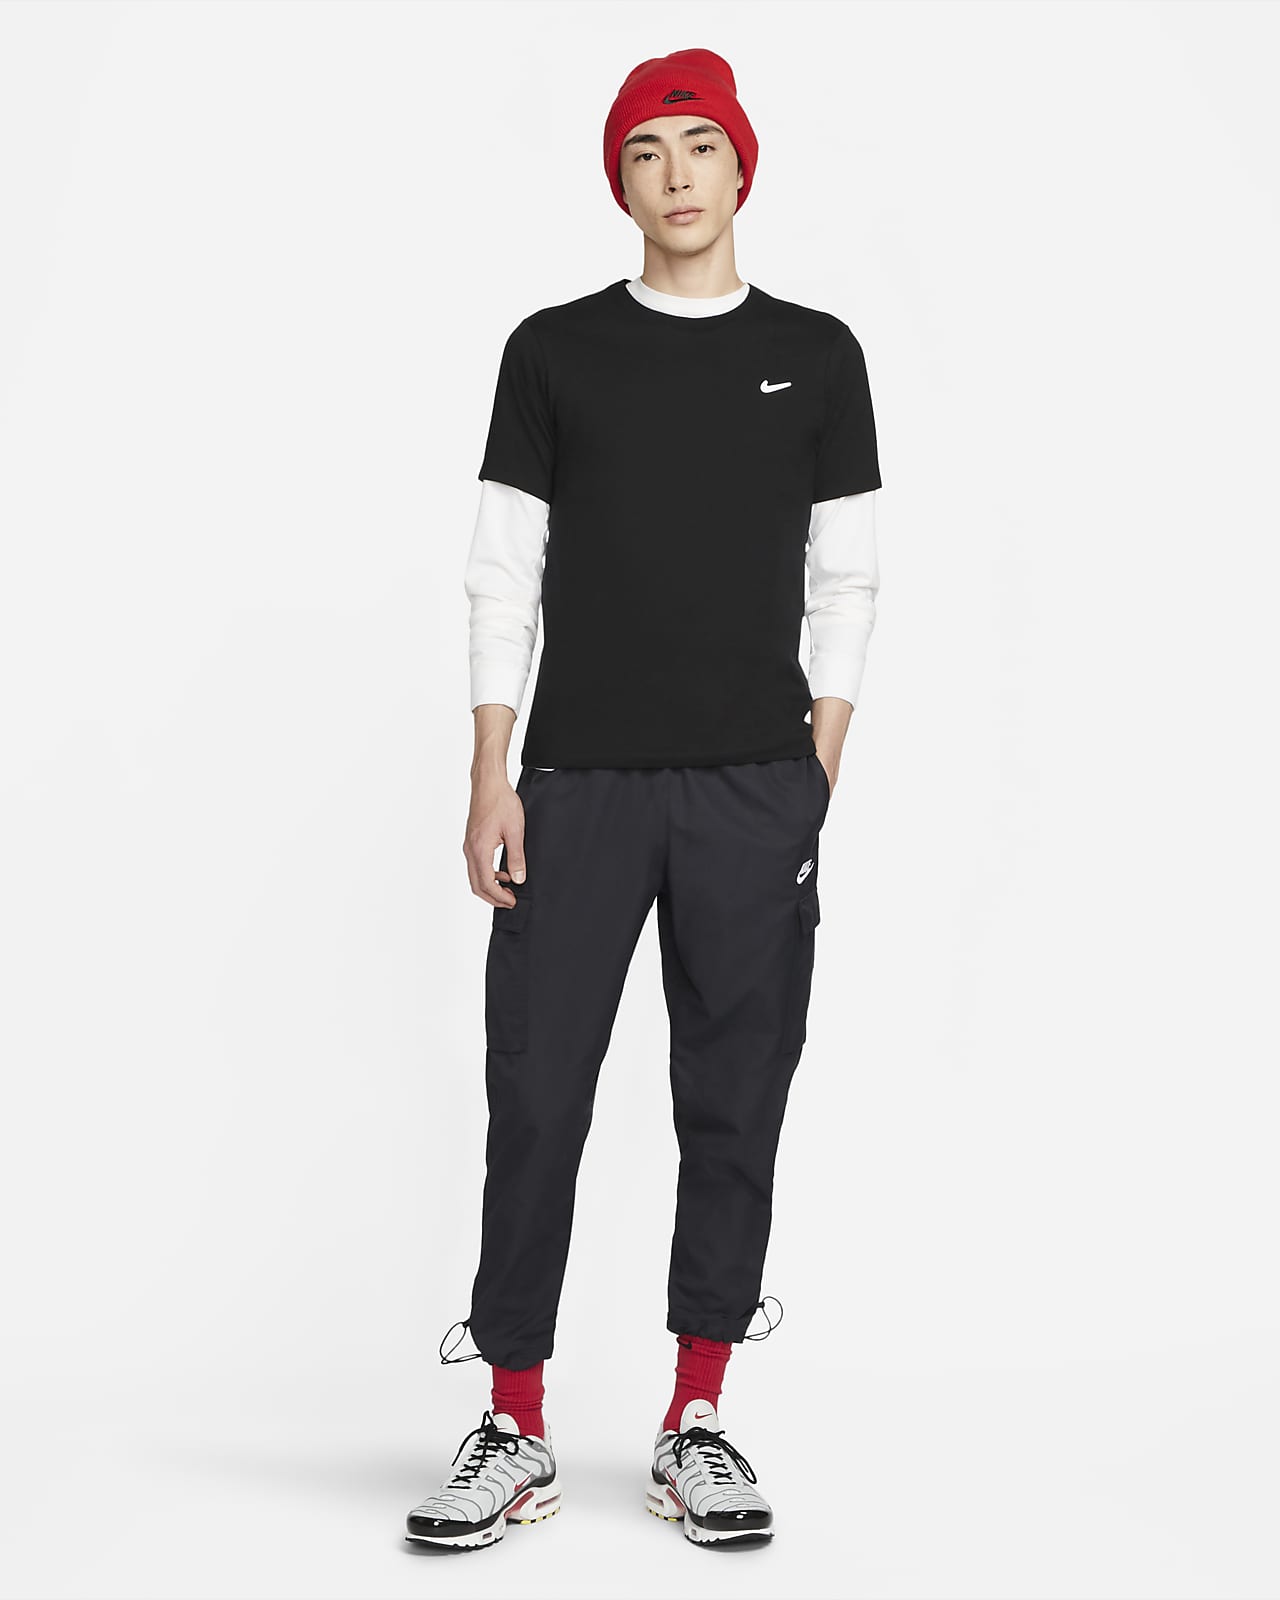 Nike Sportswear Men's T-Shirt. Nike SA